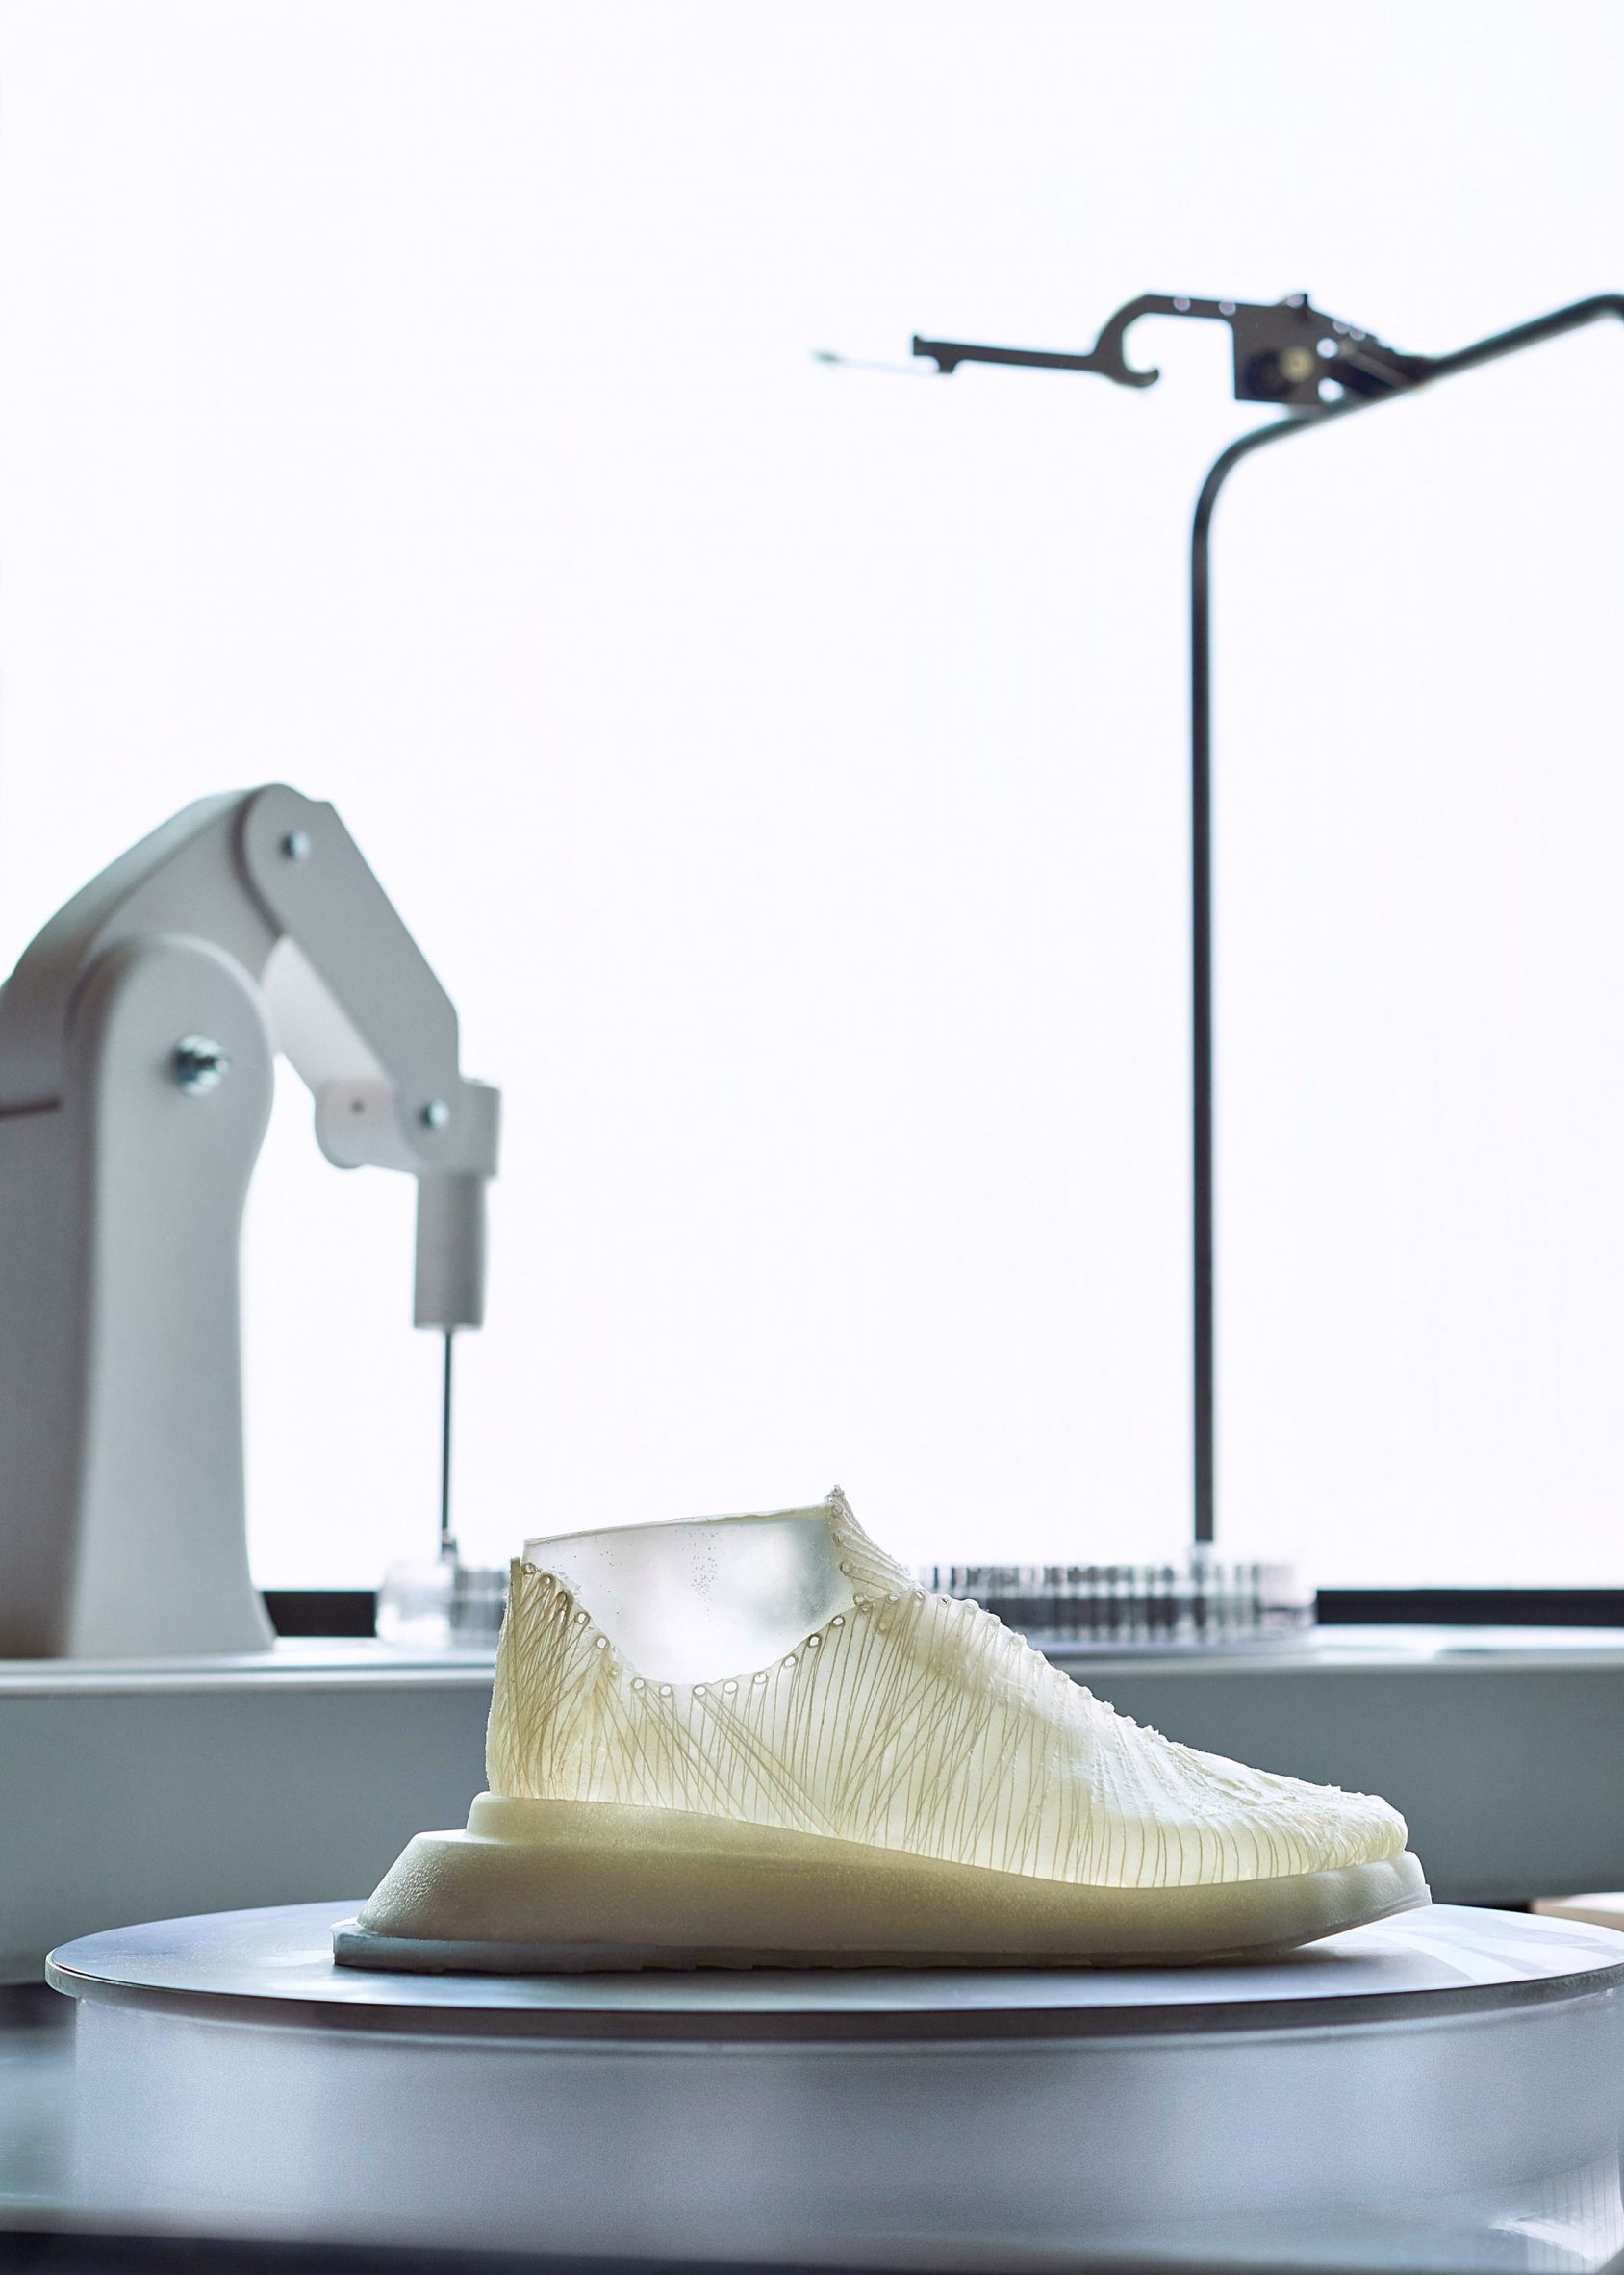 Prototype biomaterial shoe